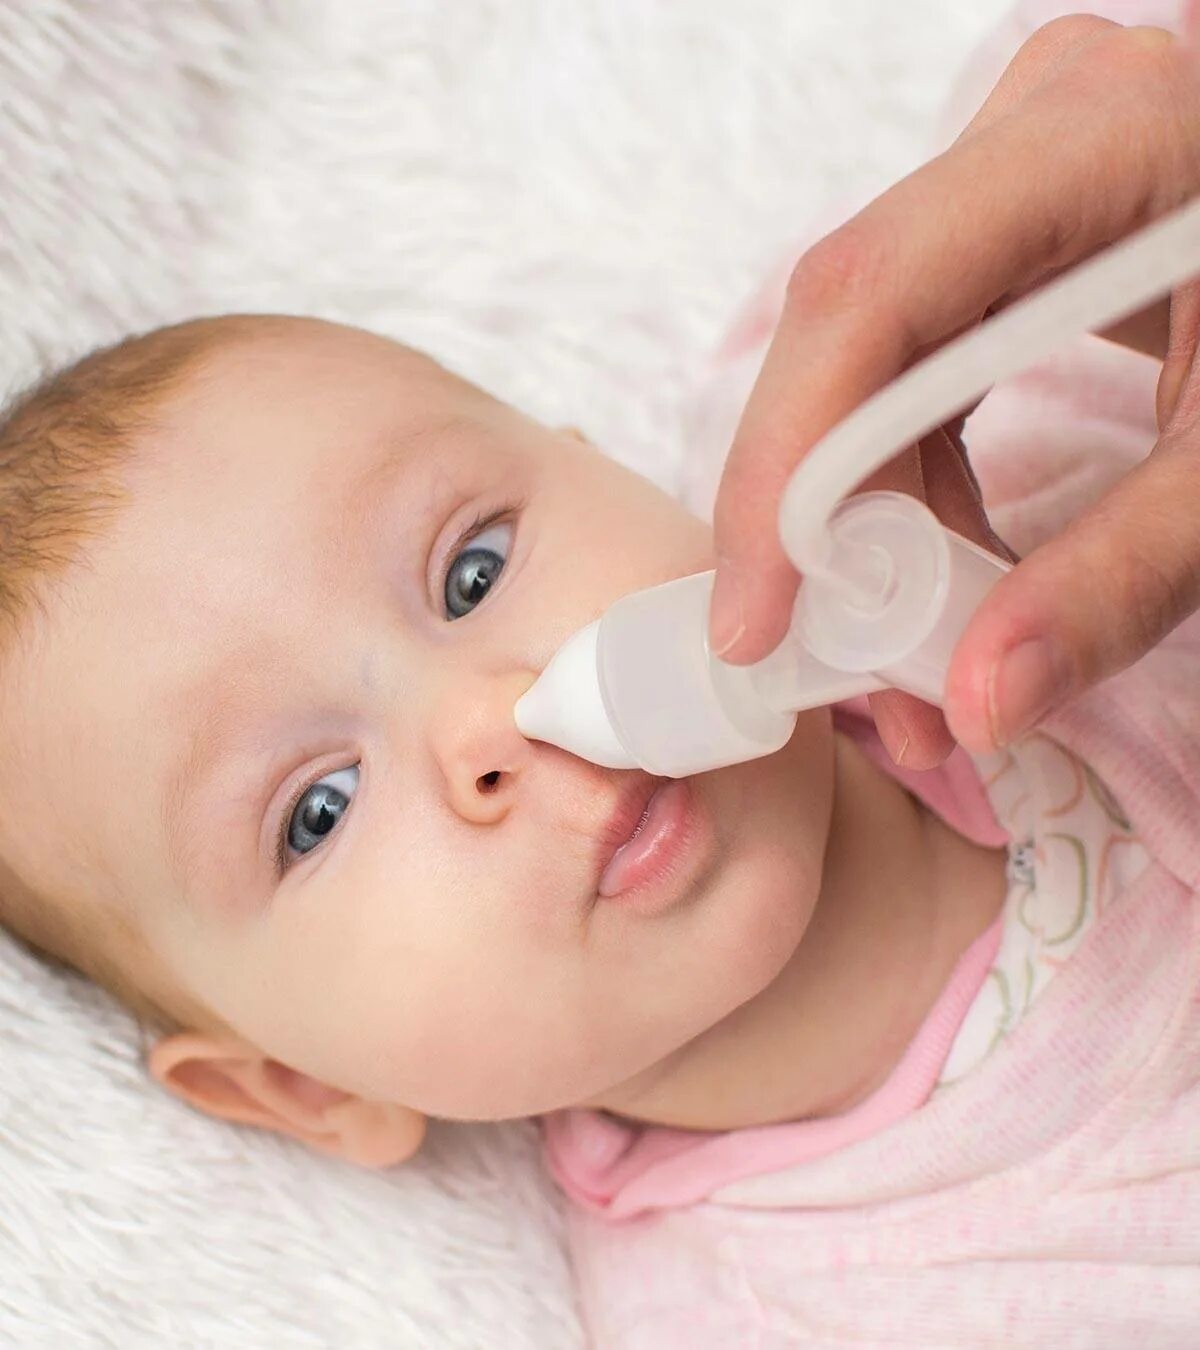 Промывка для носа для детей. Промывание носа. Промывание носа для новорожденных. Промывание носа грудничку. Промывание носа физраствором ребенку.